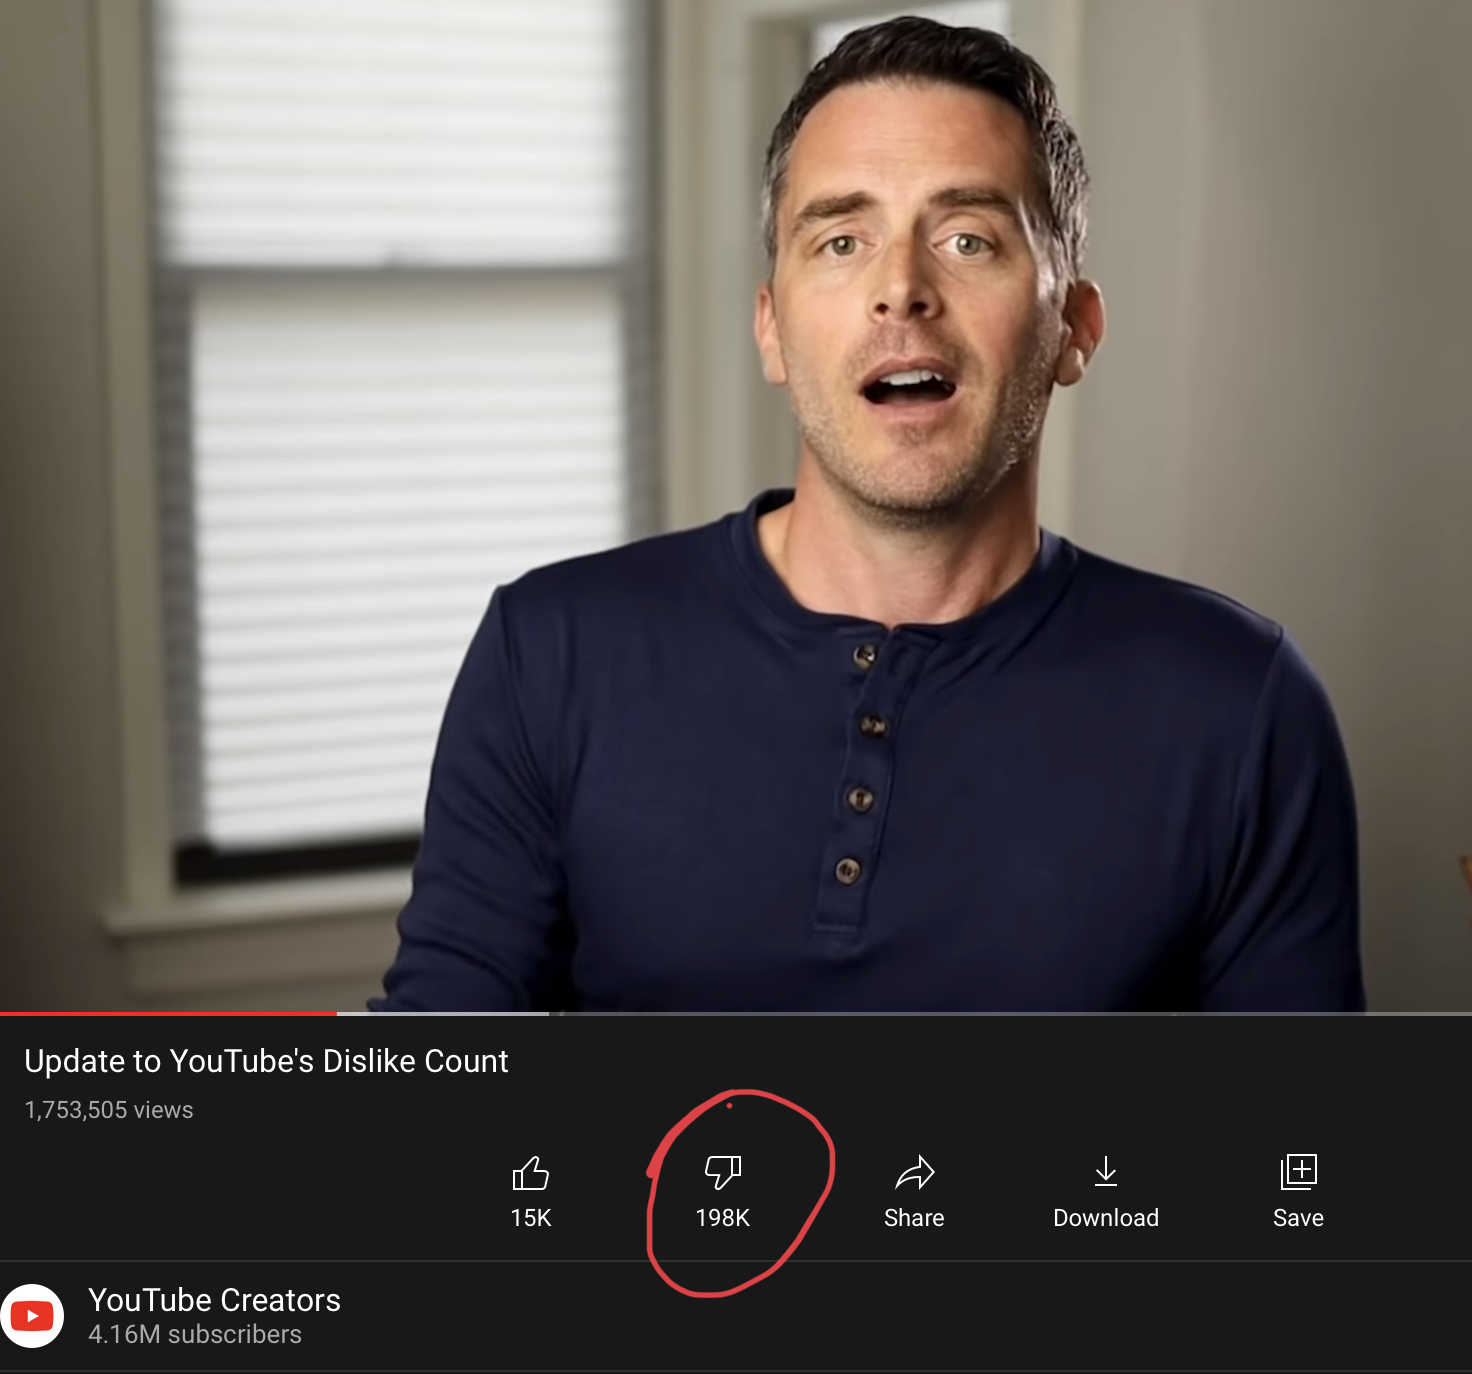 YouTube removes dislikes